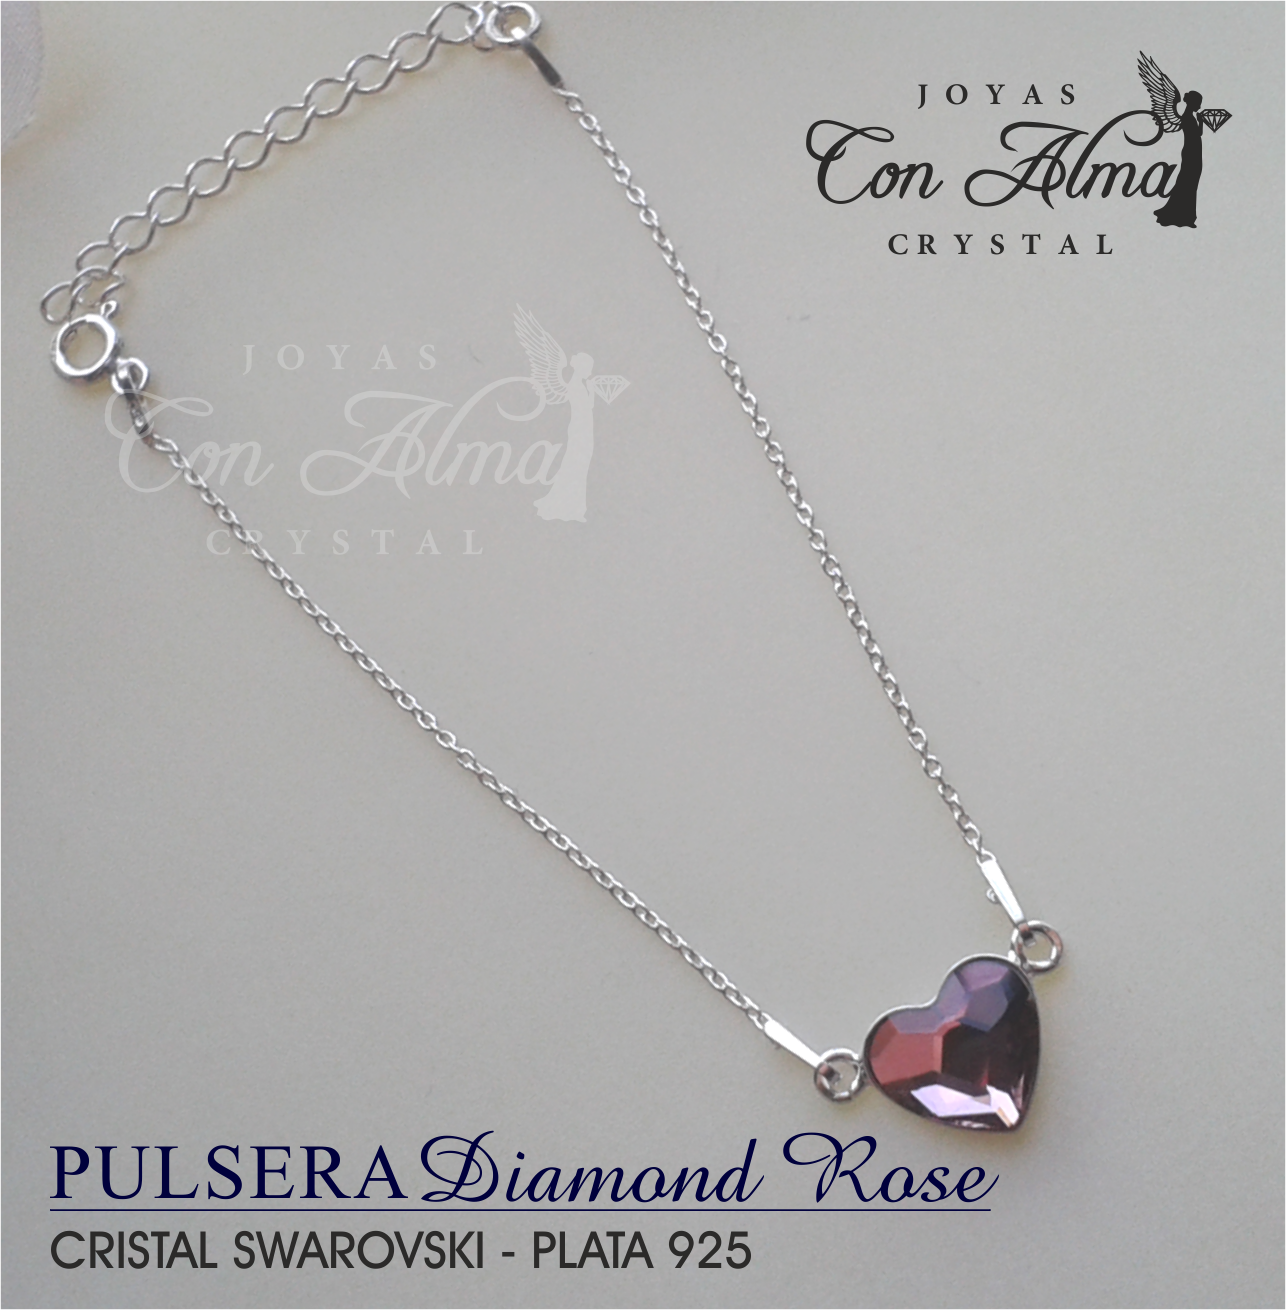 Pulsera Diamond Rose 25,99 €